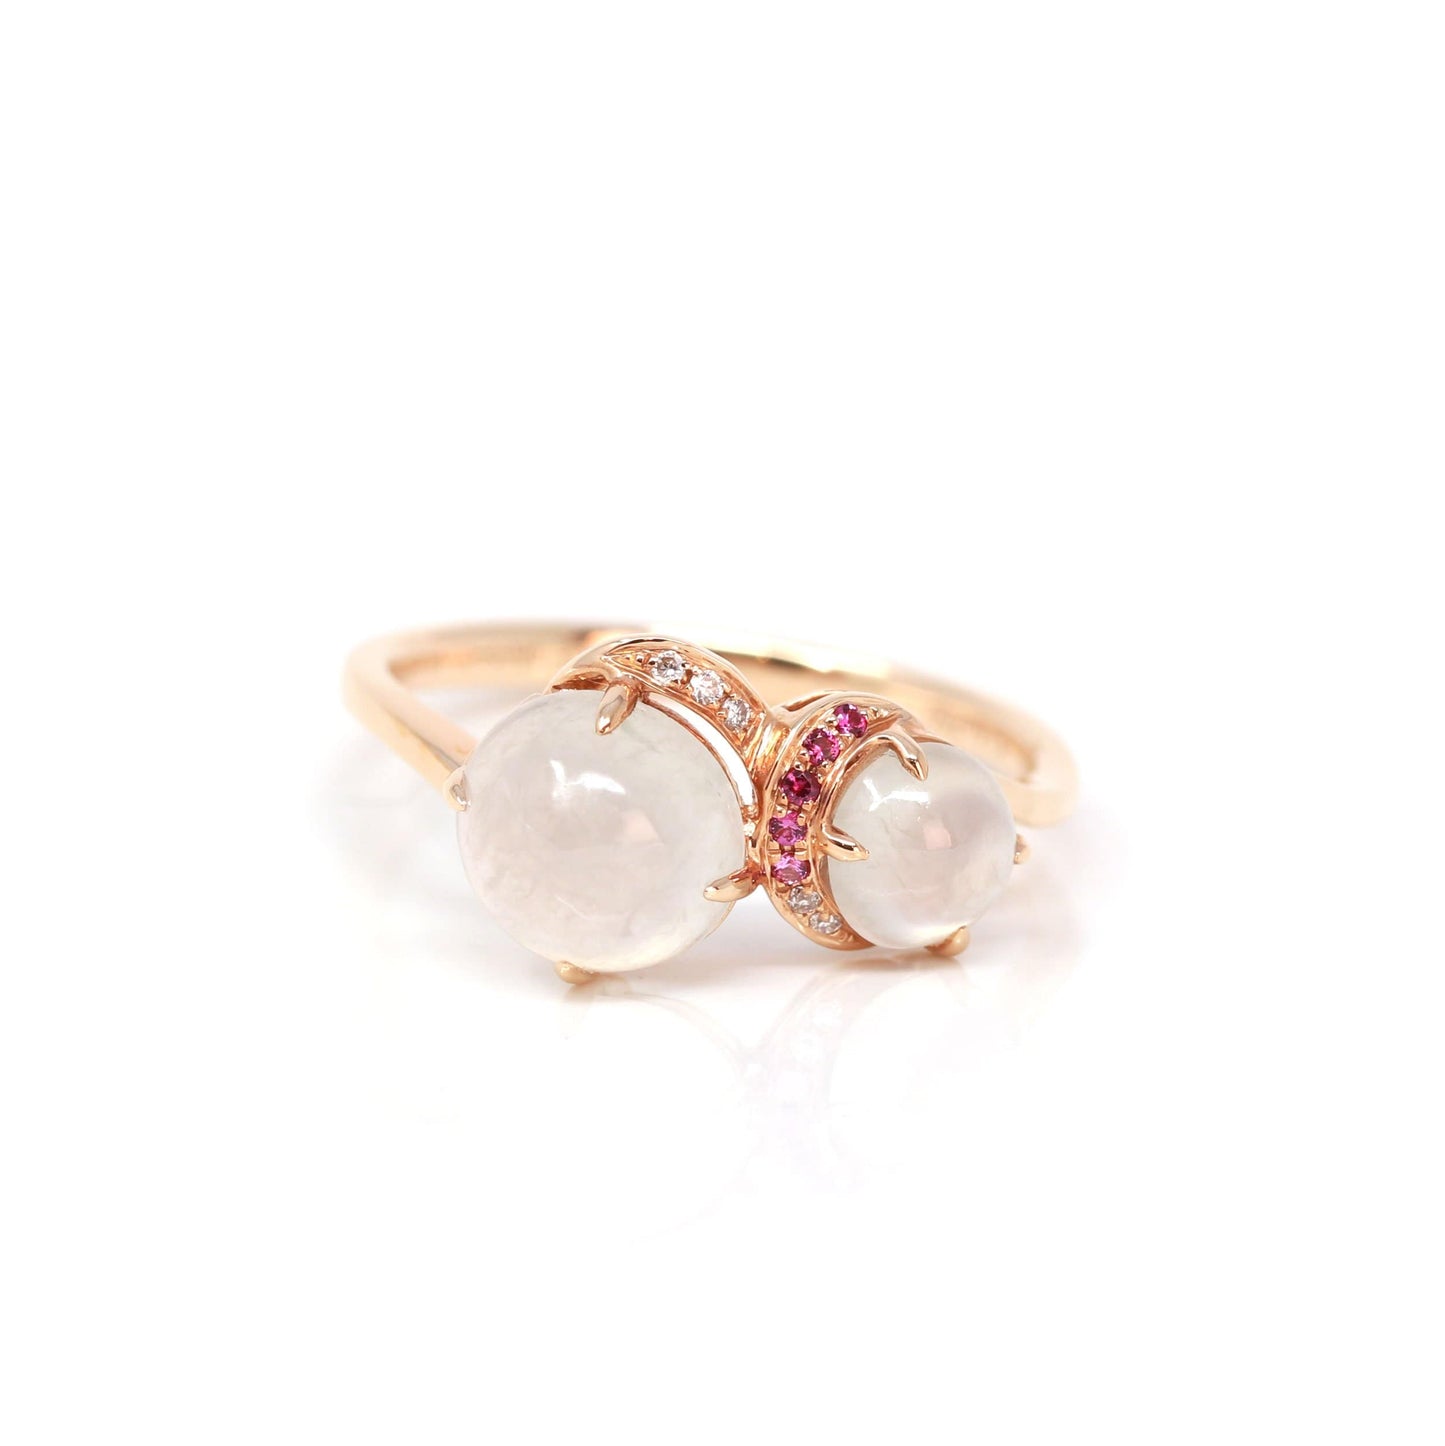 RealJade® "Jules" 18k Rose Gold Natural Ice Jadeite Engagement Ring With Rubys & Diamonds